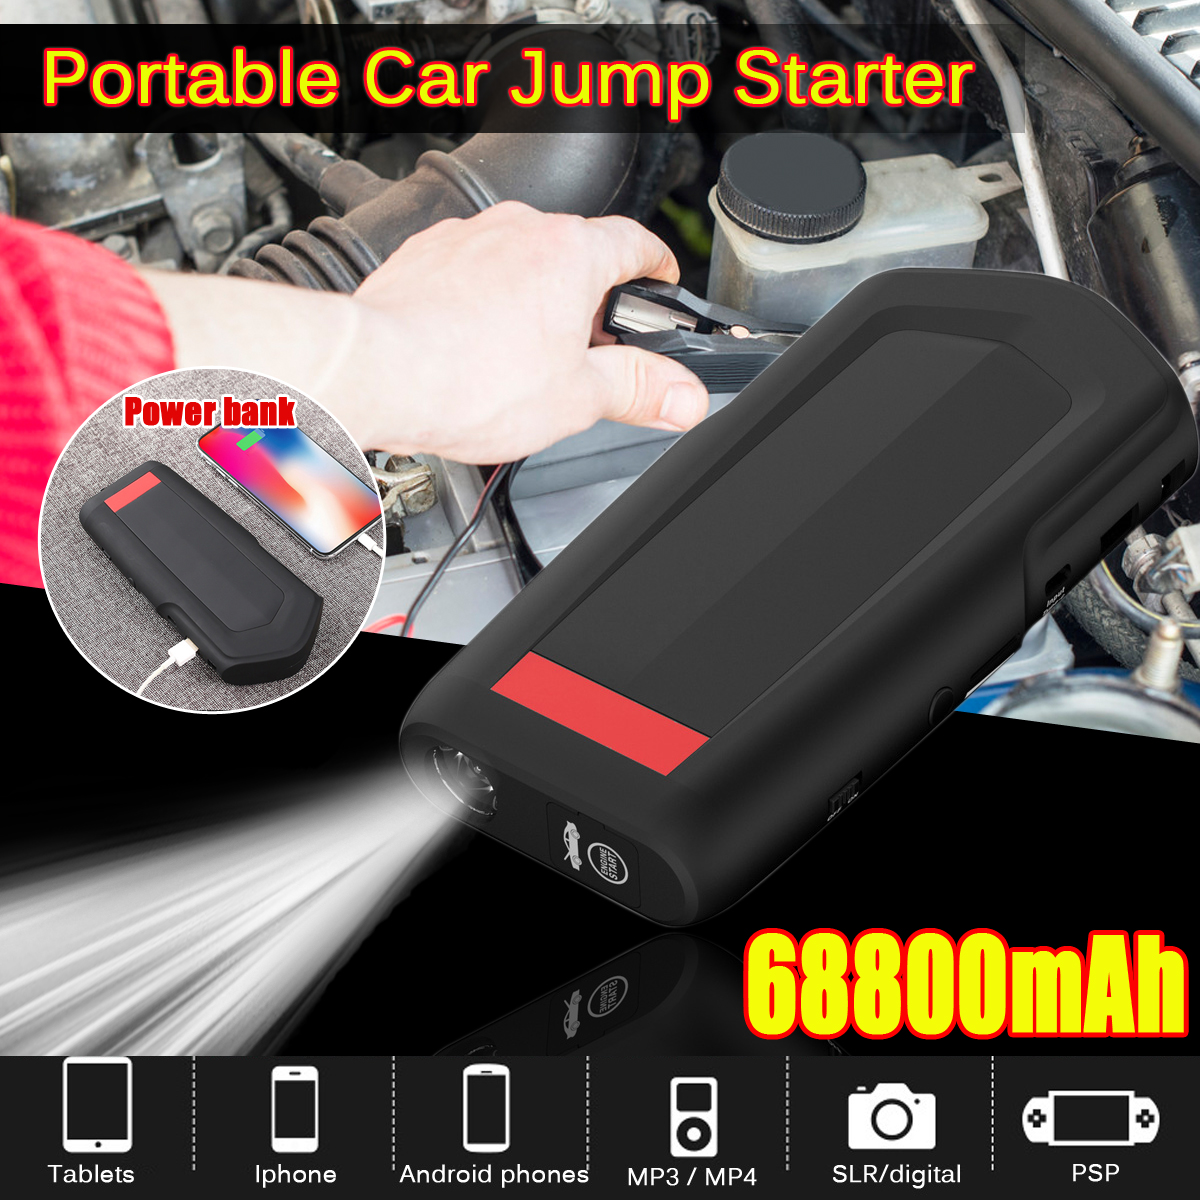 68800mah-Car-Jump-Starter-Car-Battery-Booster-Portable-Power-Pack-Emergency-Car-Power-Bank-1601304-2